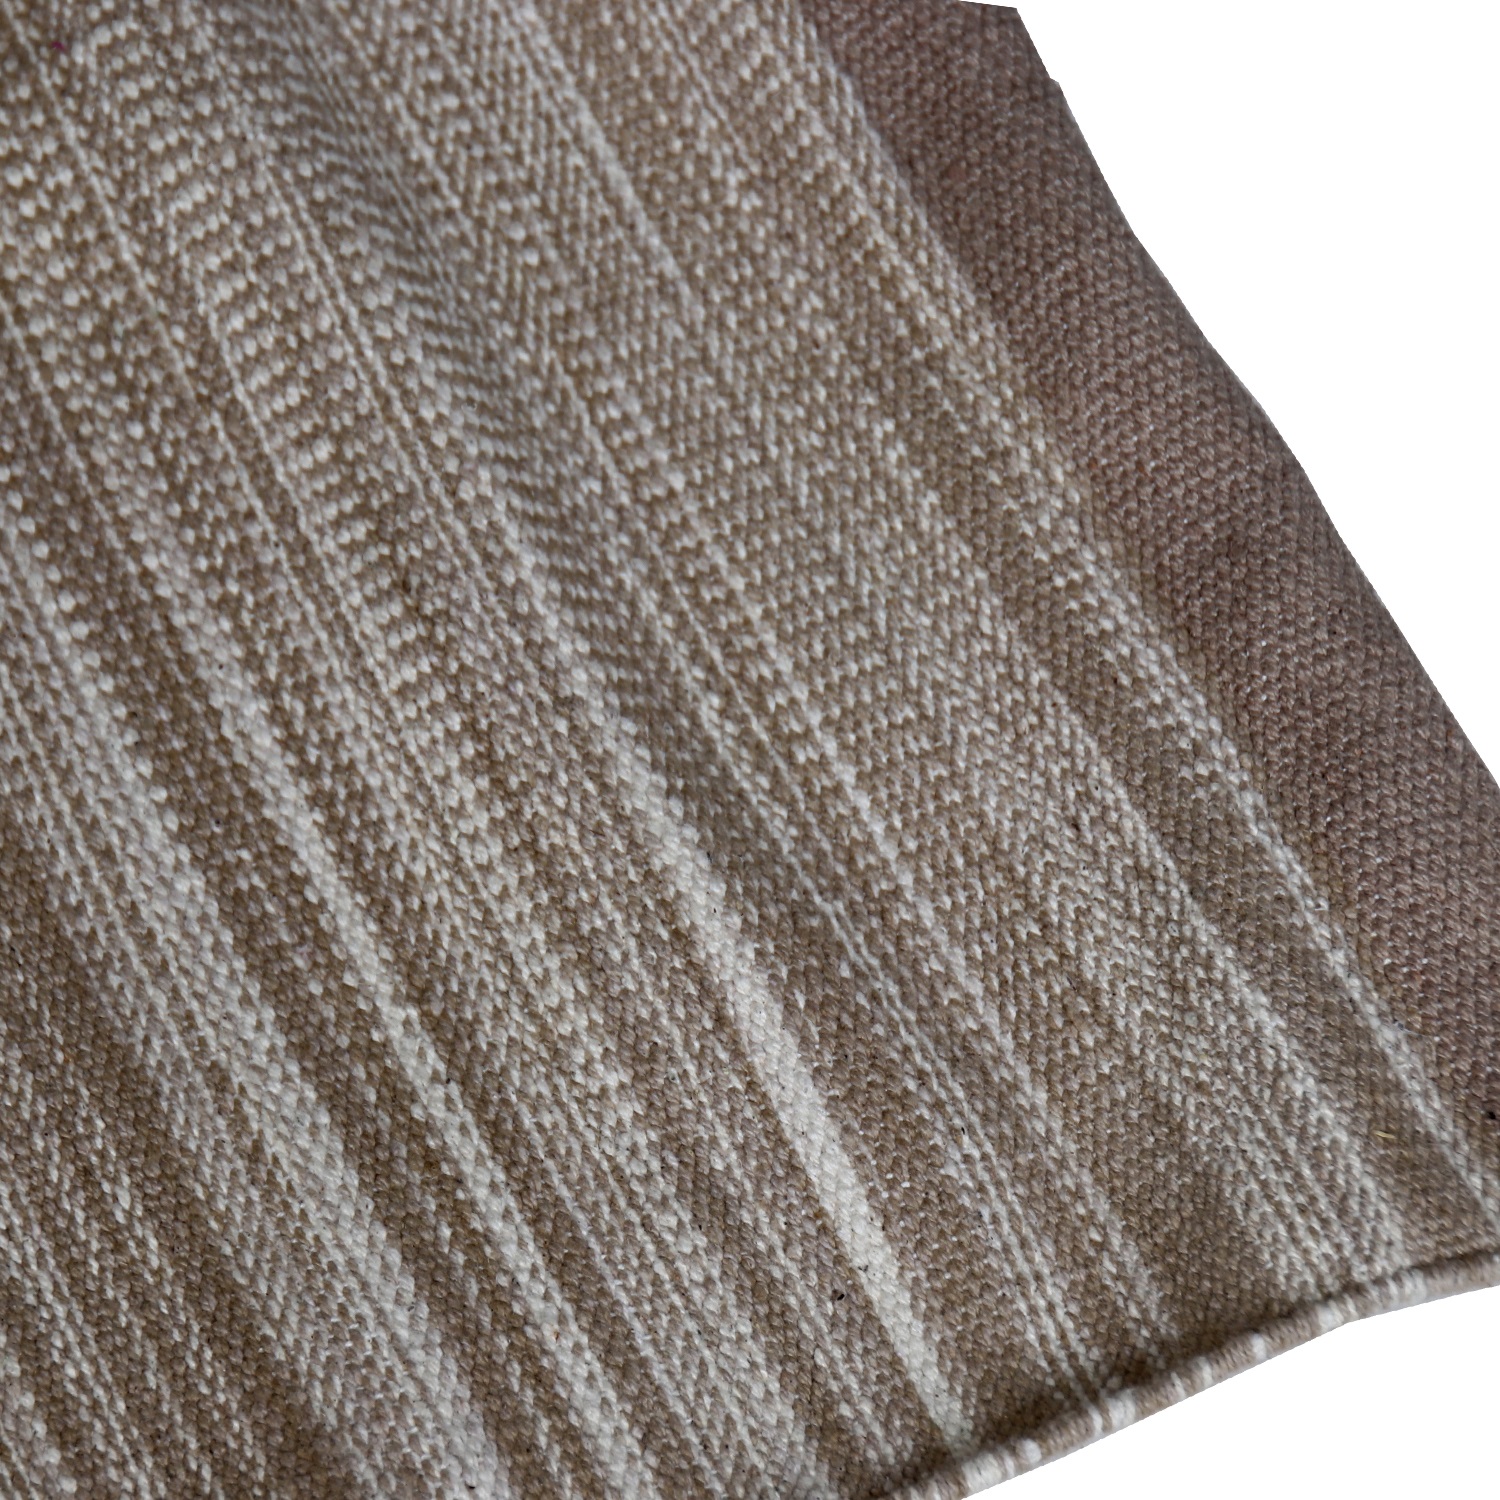 34709-alfombra-rayas-blanco-beige-140-x-200-1.jpg